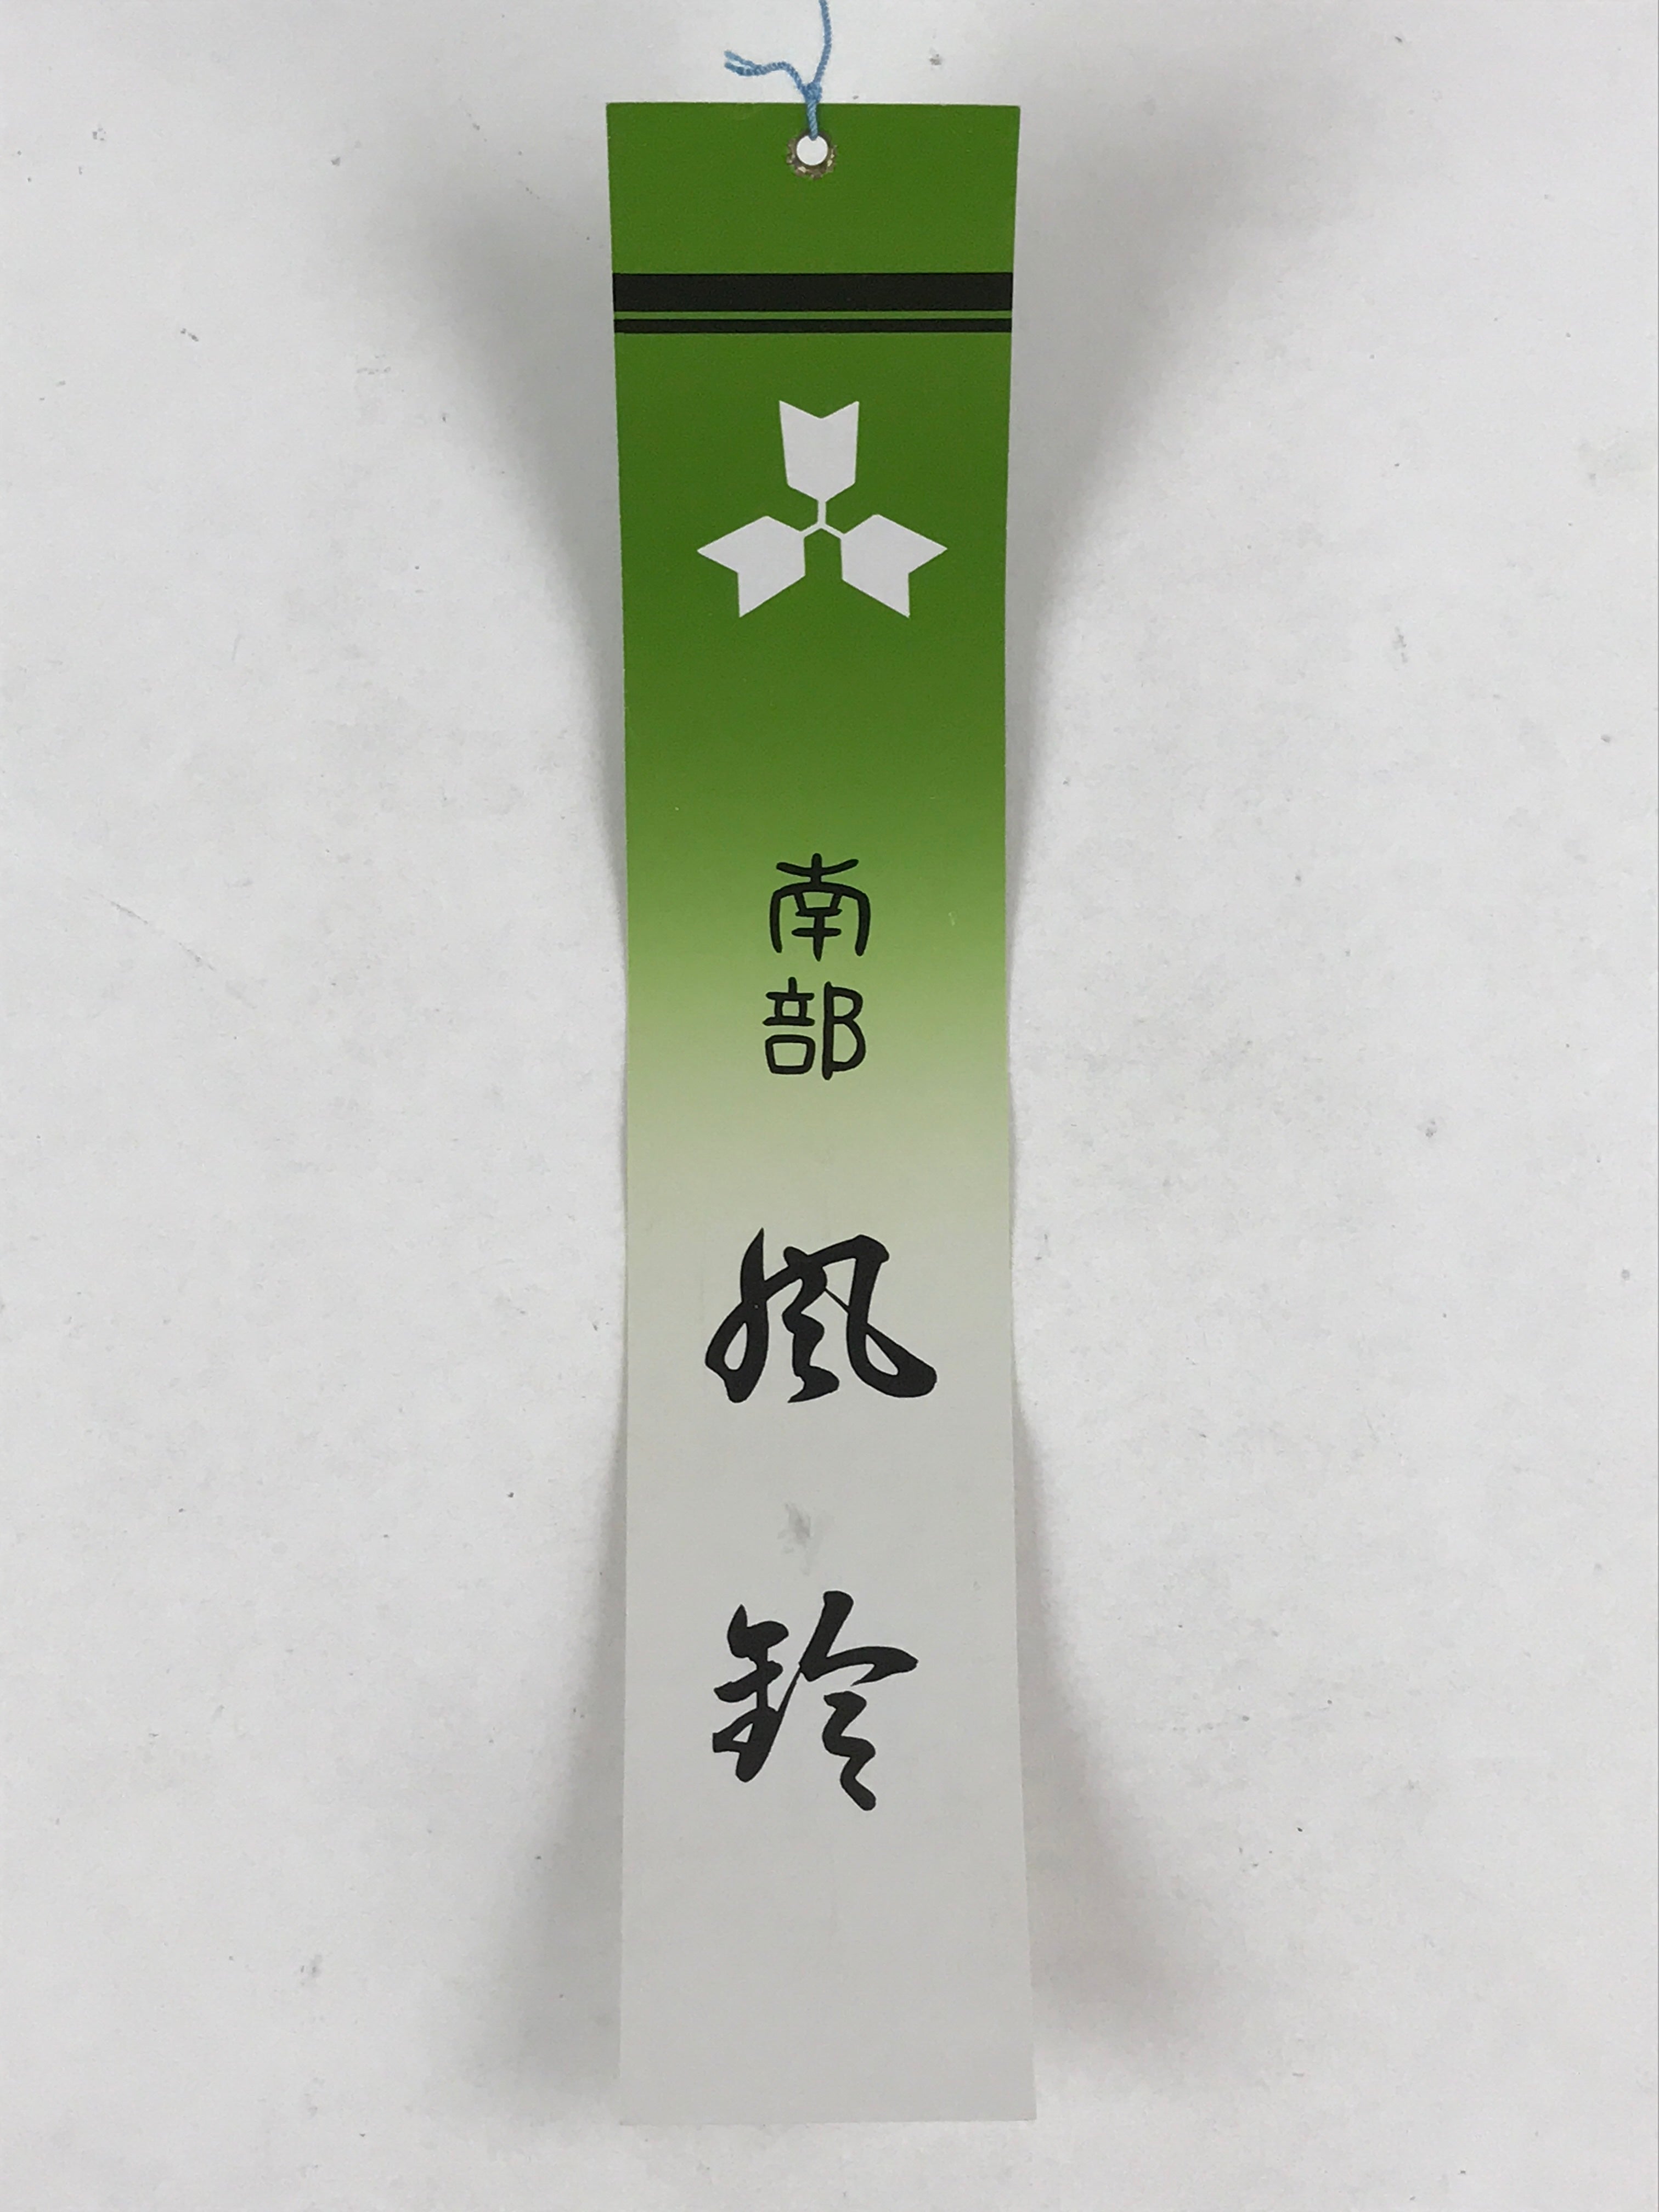 Japanese Iron Furin Wind Chime Tetsurin Vtg Green Paper String Iwate Nanbu DR494